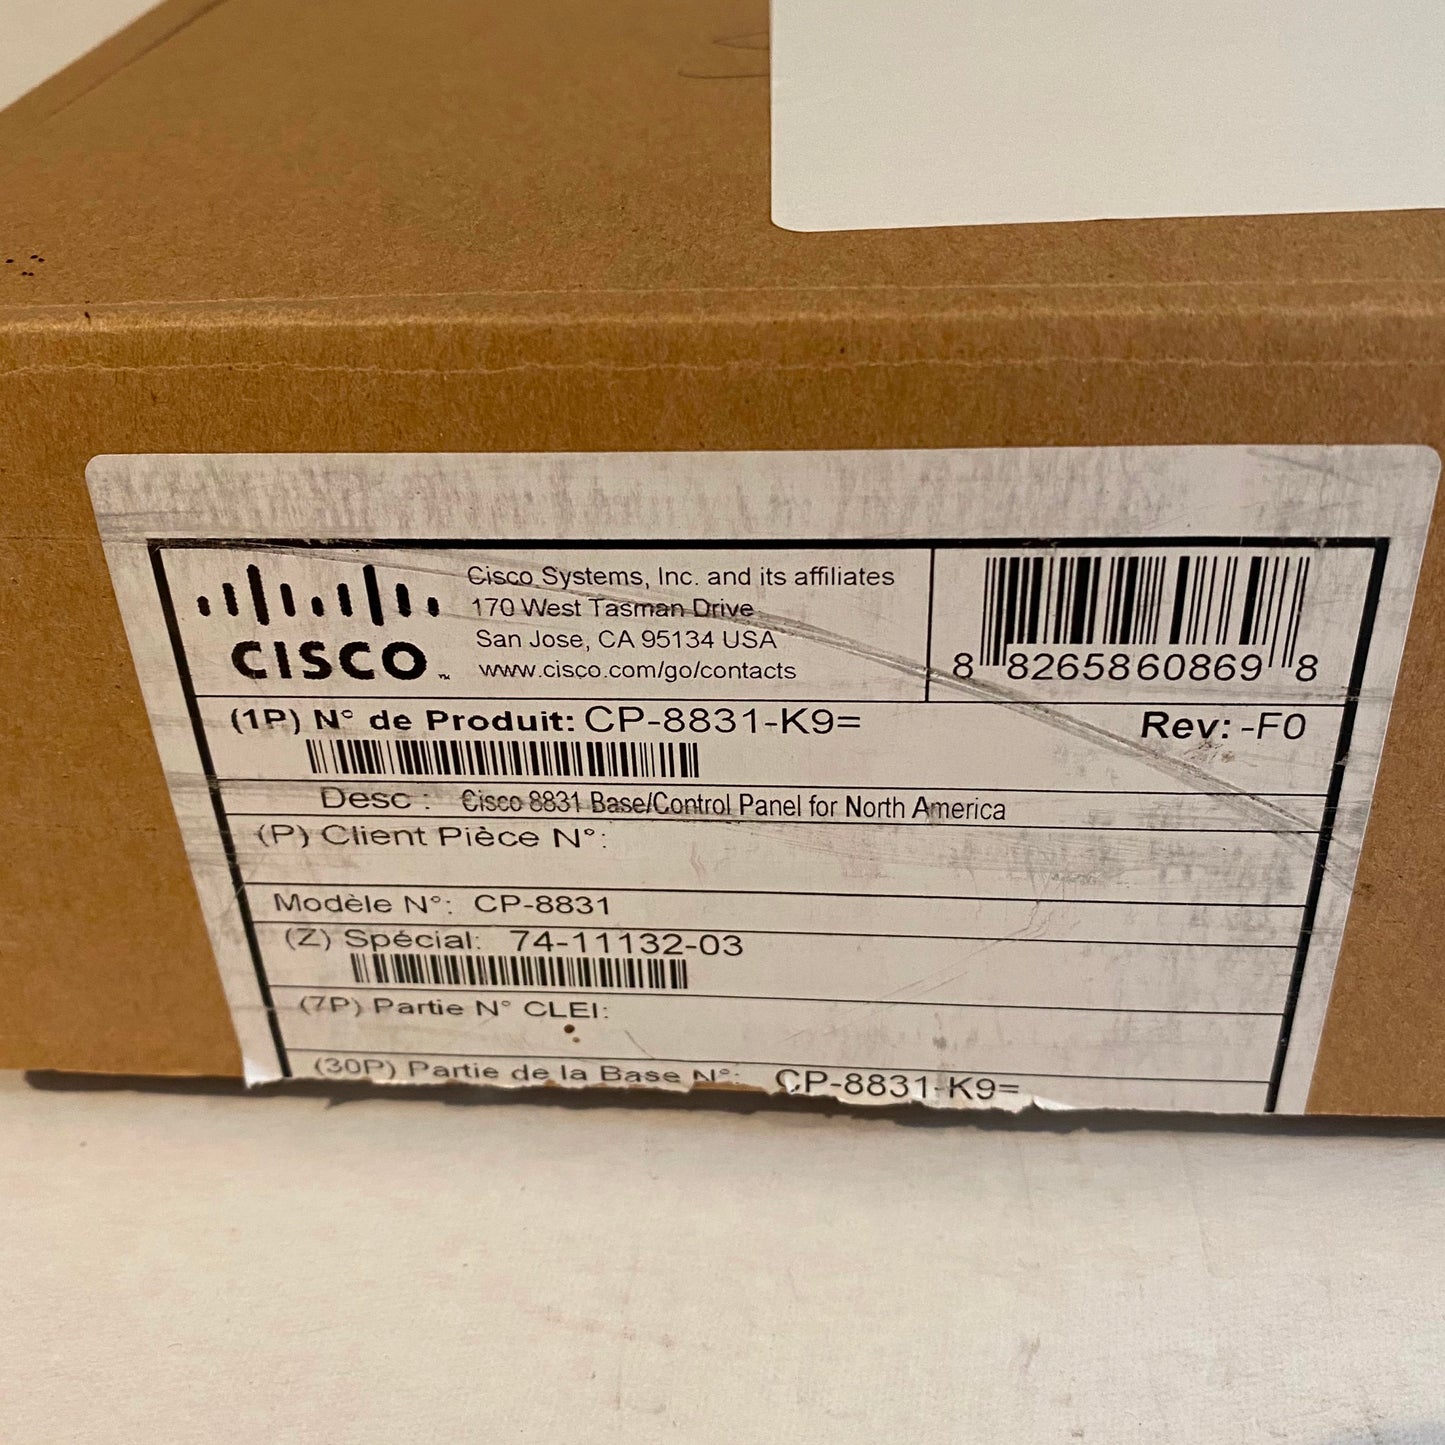 Cisco 8831 Control Base and Keypad - CP-8831-K9=